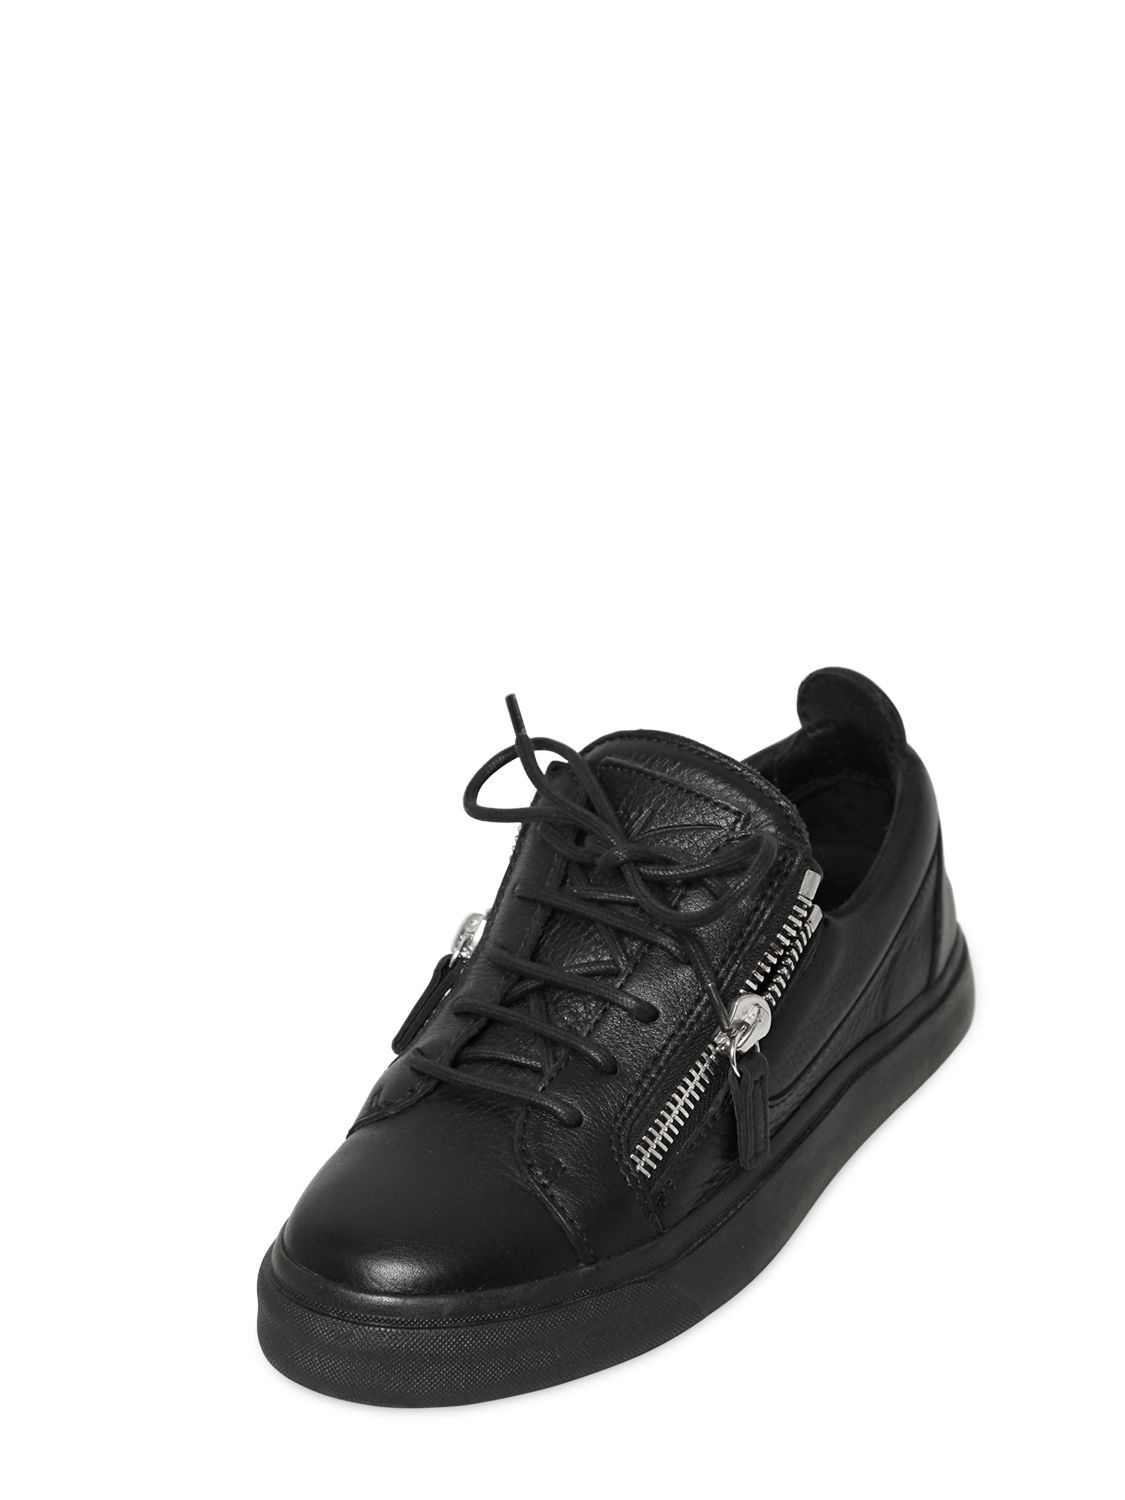 Lyst - Giuseppe Zanotti 20mm Zipped Leather Sneakers in Black for Men